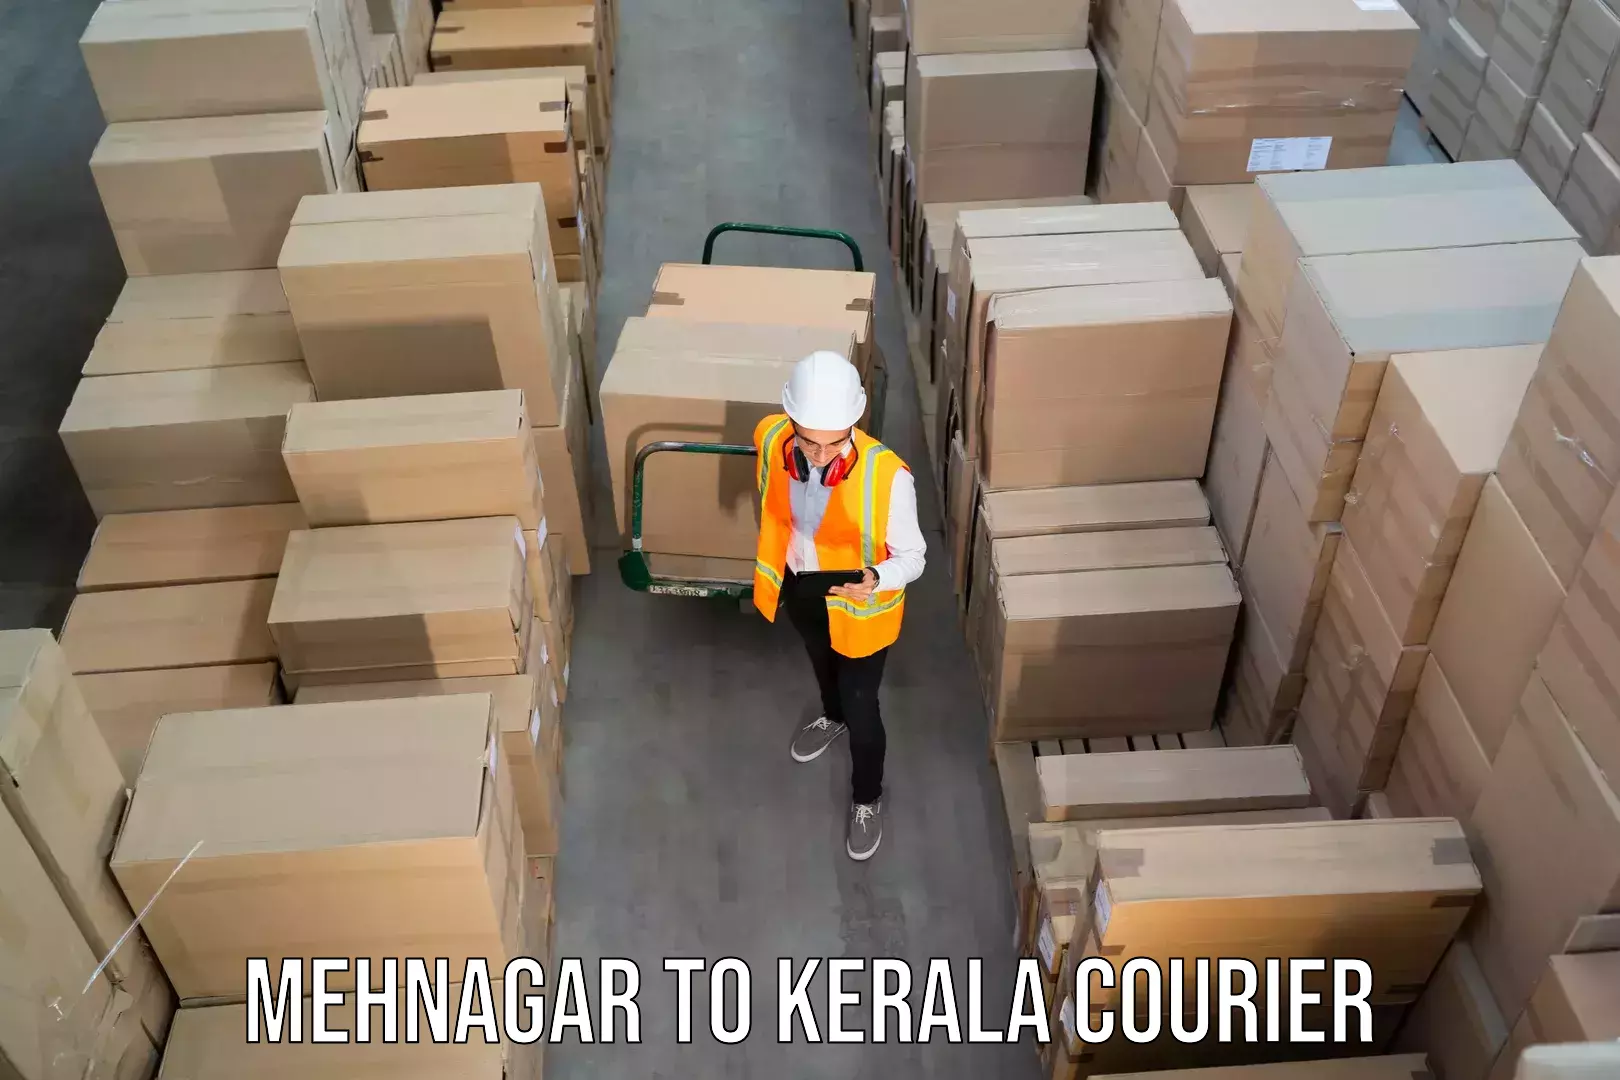 User-friendly delivery service Mehnagar to Kerala